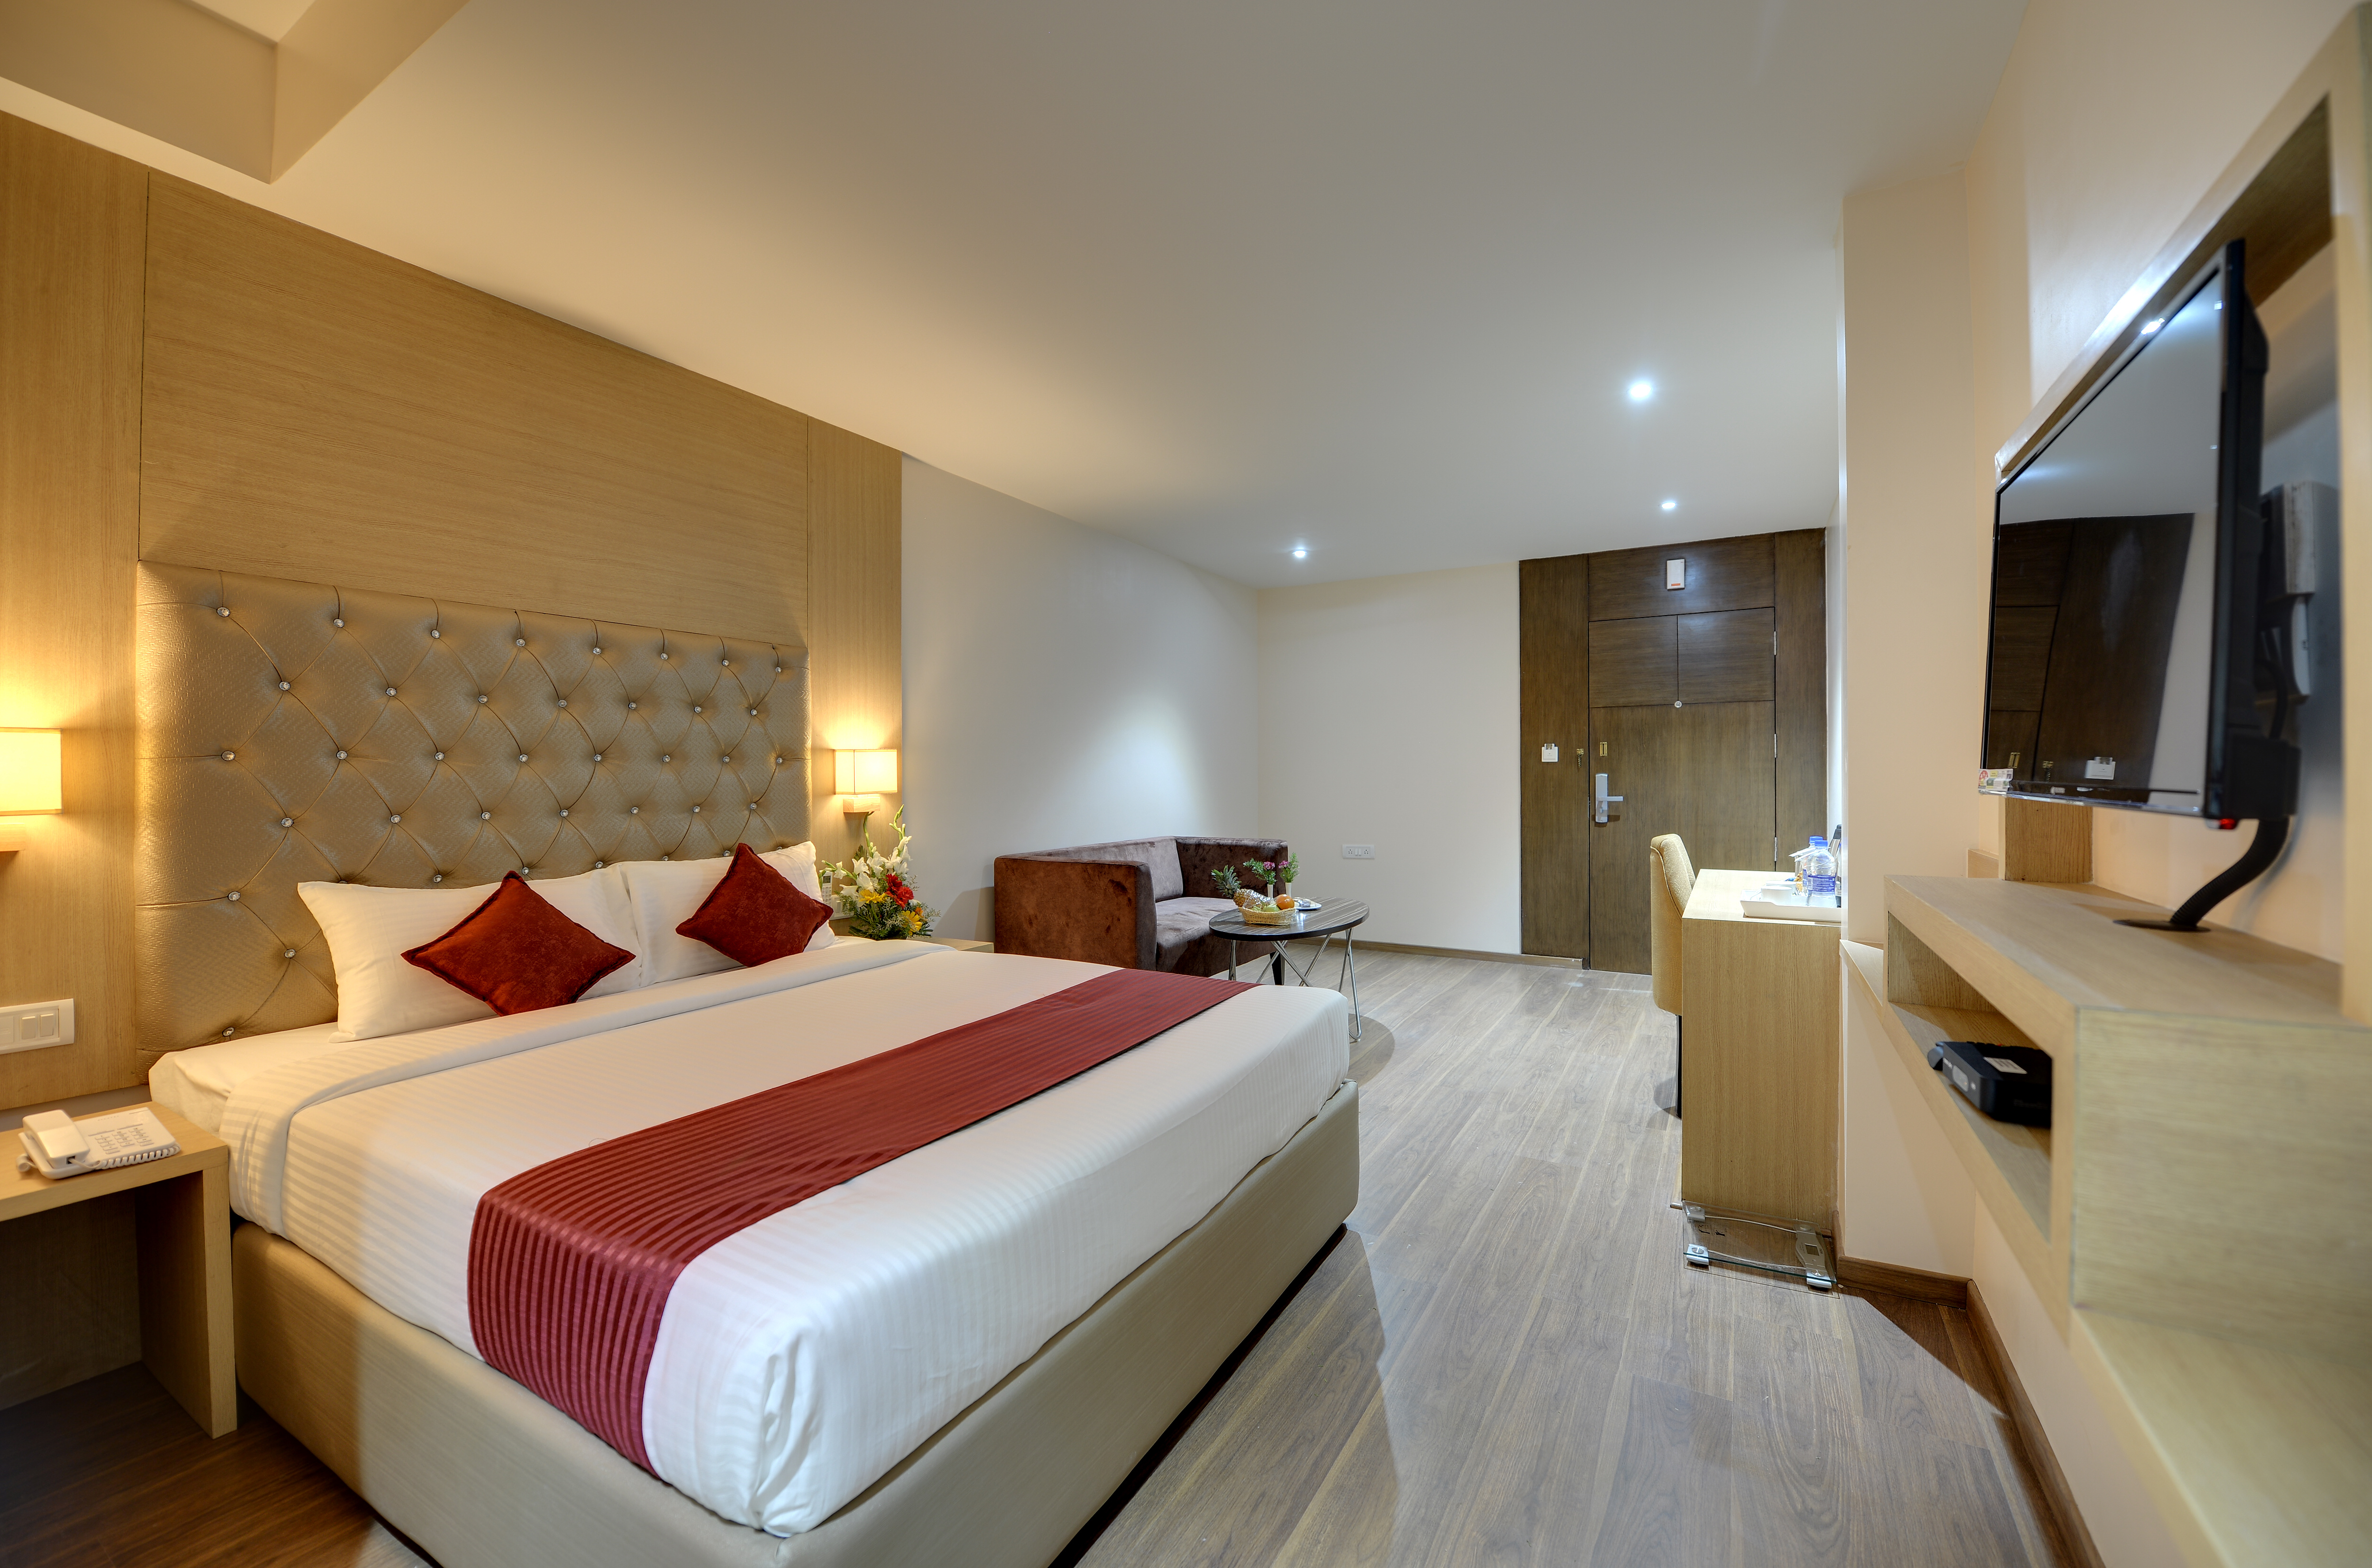 Club Room Hotel Nandhana Pride Bangalore Best Hotels 5